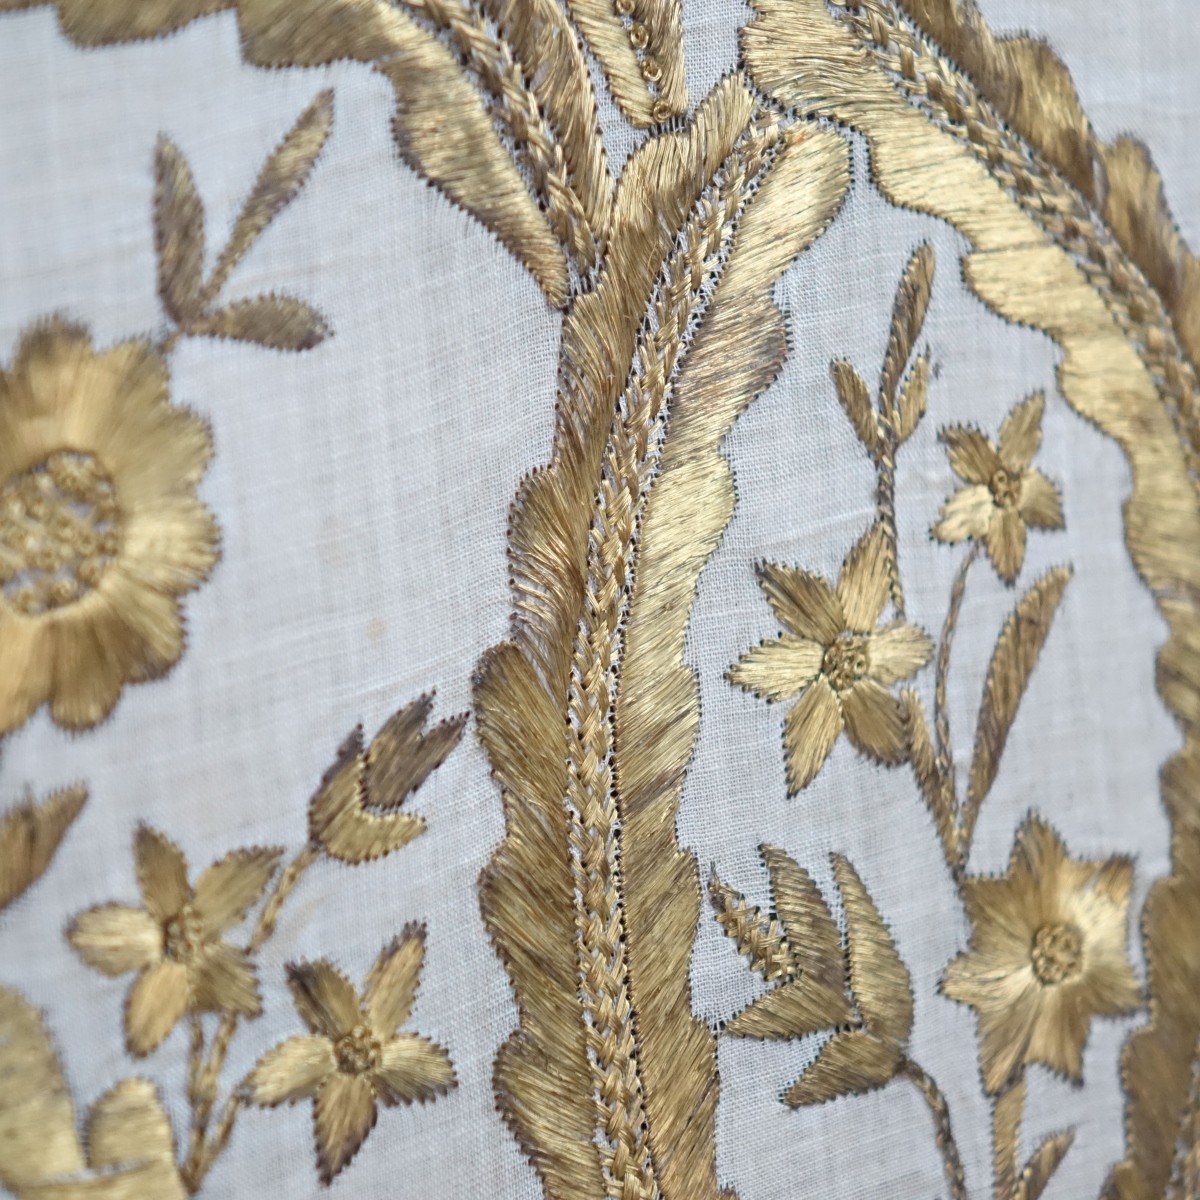 Ottoman Empire Embroidery Panels